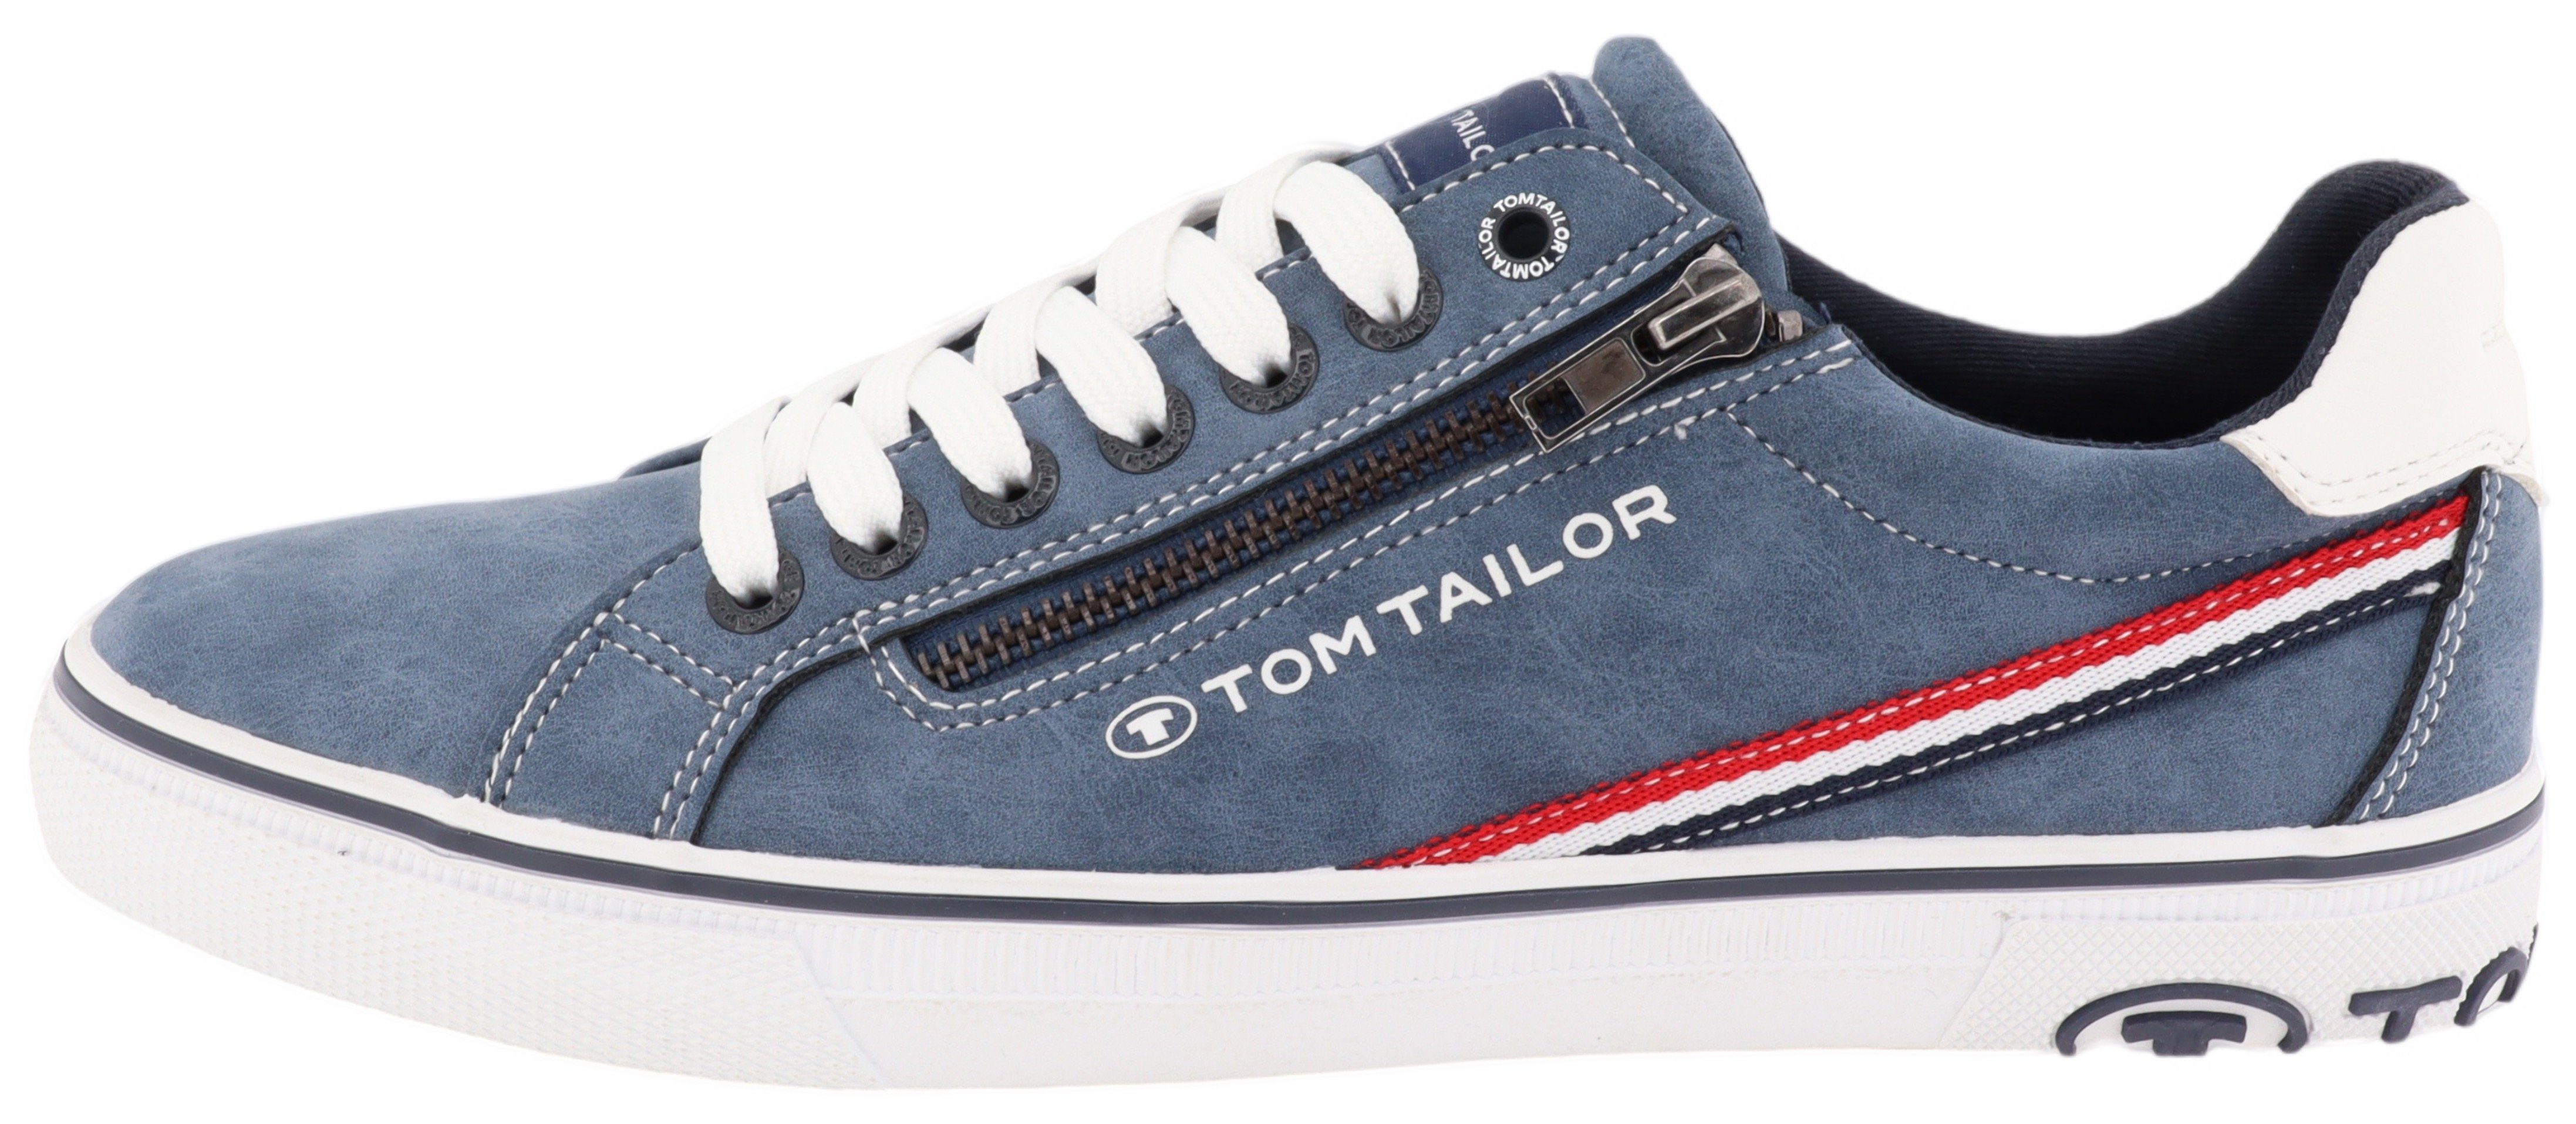 Ferse jeansblau Sneaker TOM an der TAILOR Kontrastbesatz mit